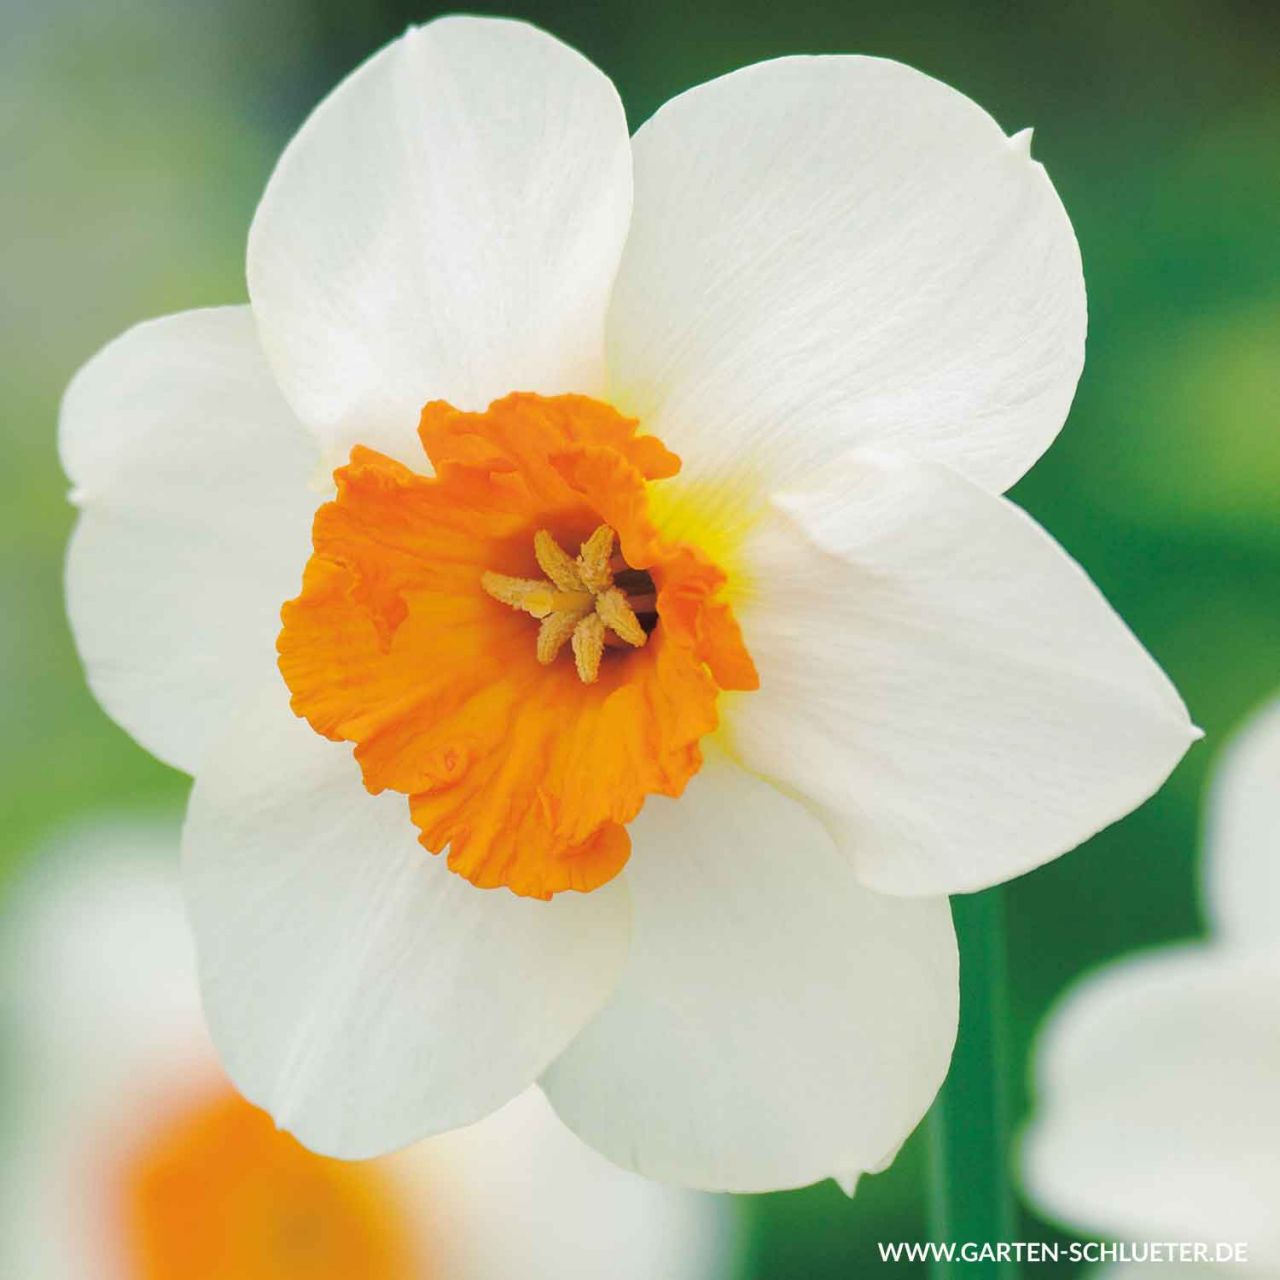 Kategorie <b>Herbst-Blumenzwiebeln </b> - Großblumige Narzissen 'Barrett Browning' - 5 Stück - Narcissus 'Barrett Browning'